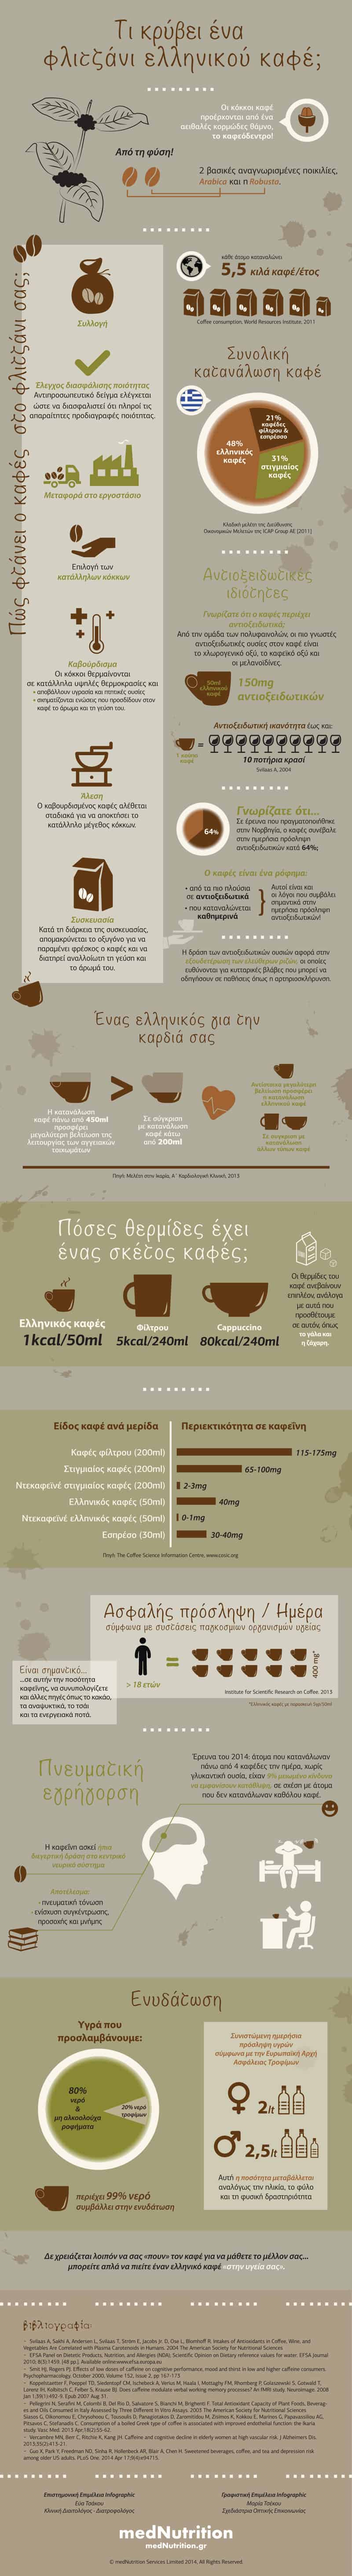 infographic ellhnikos